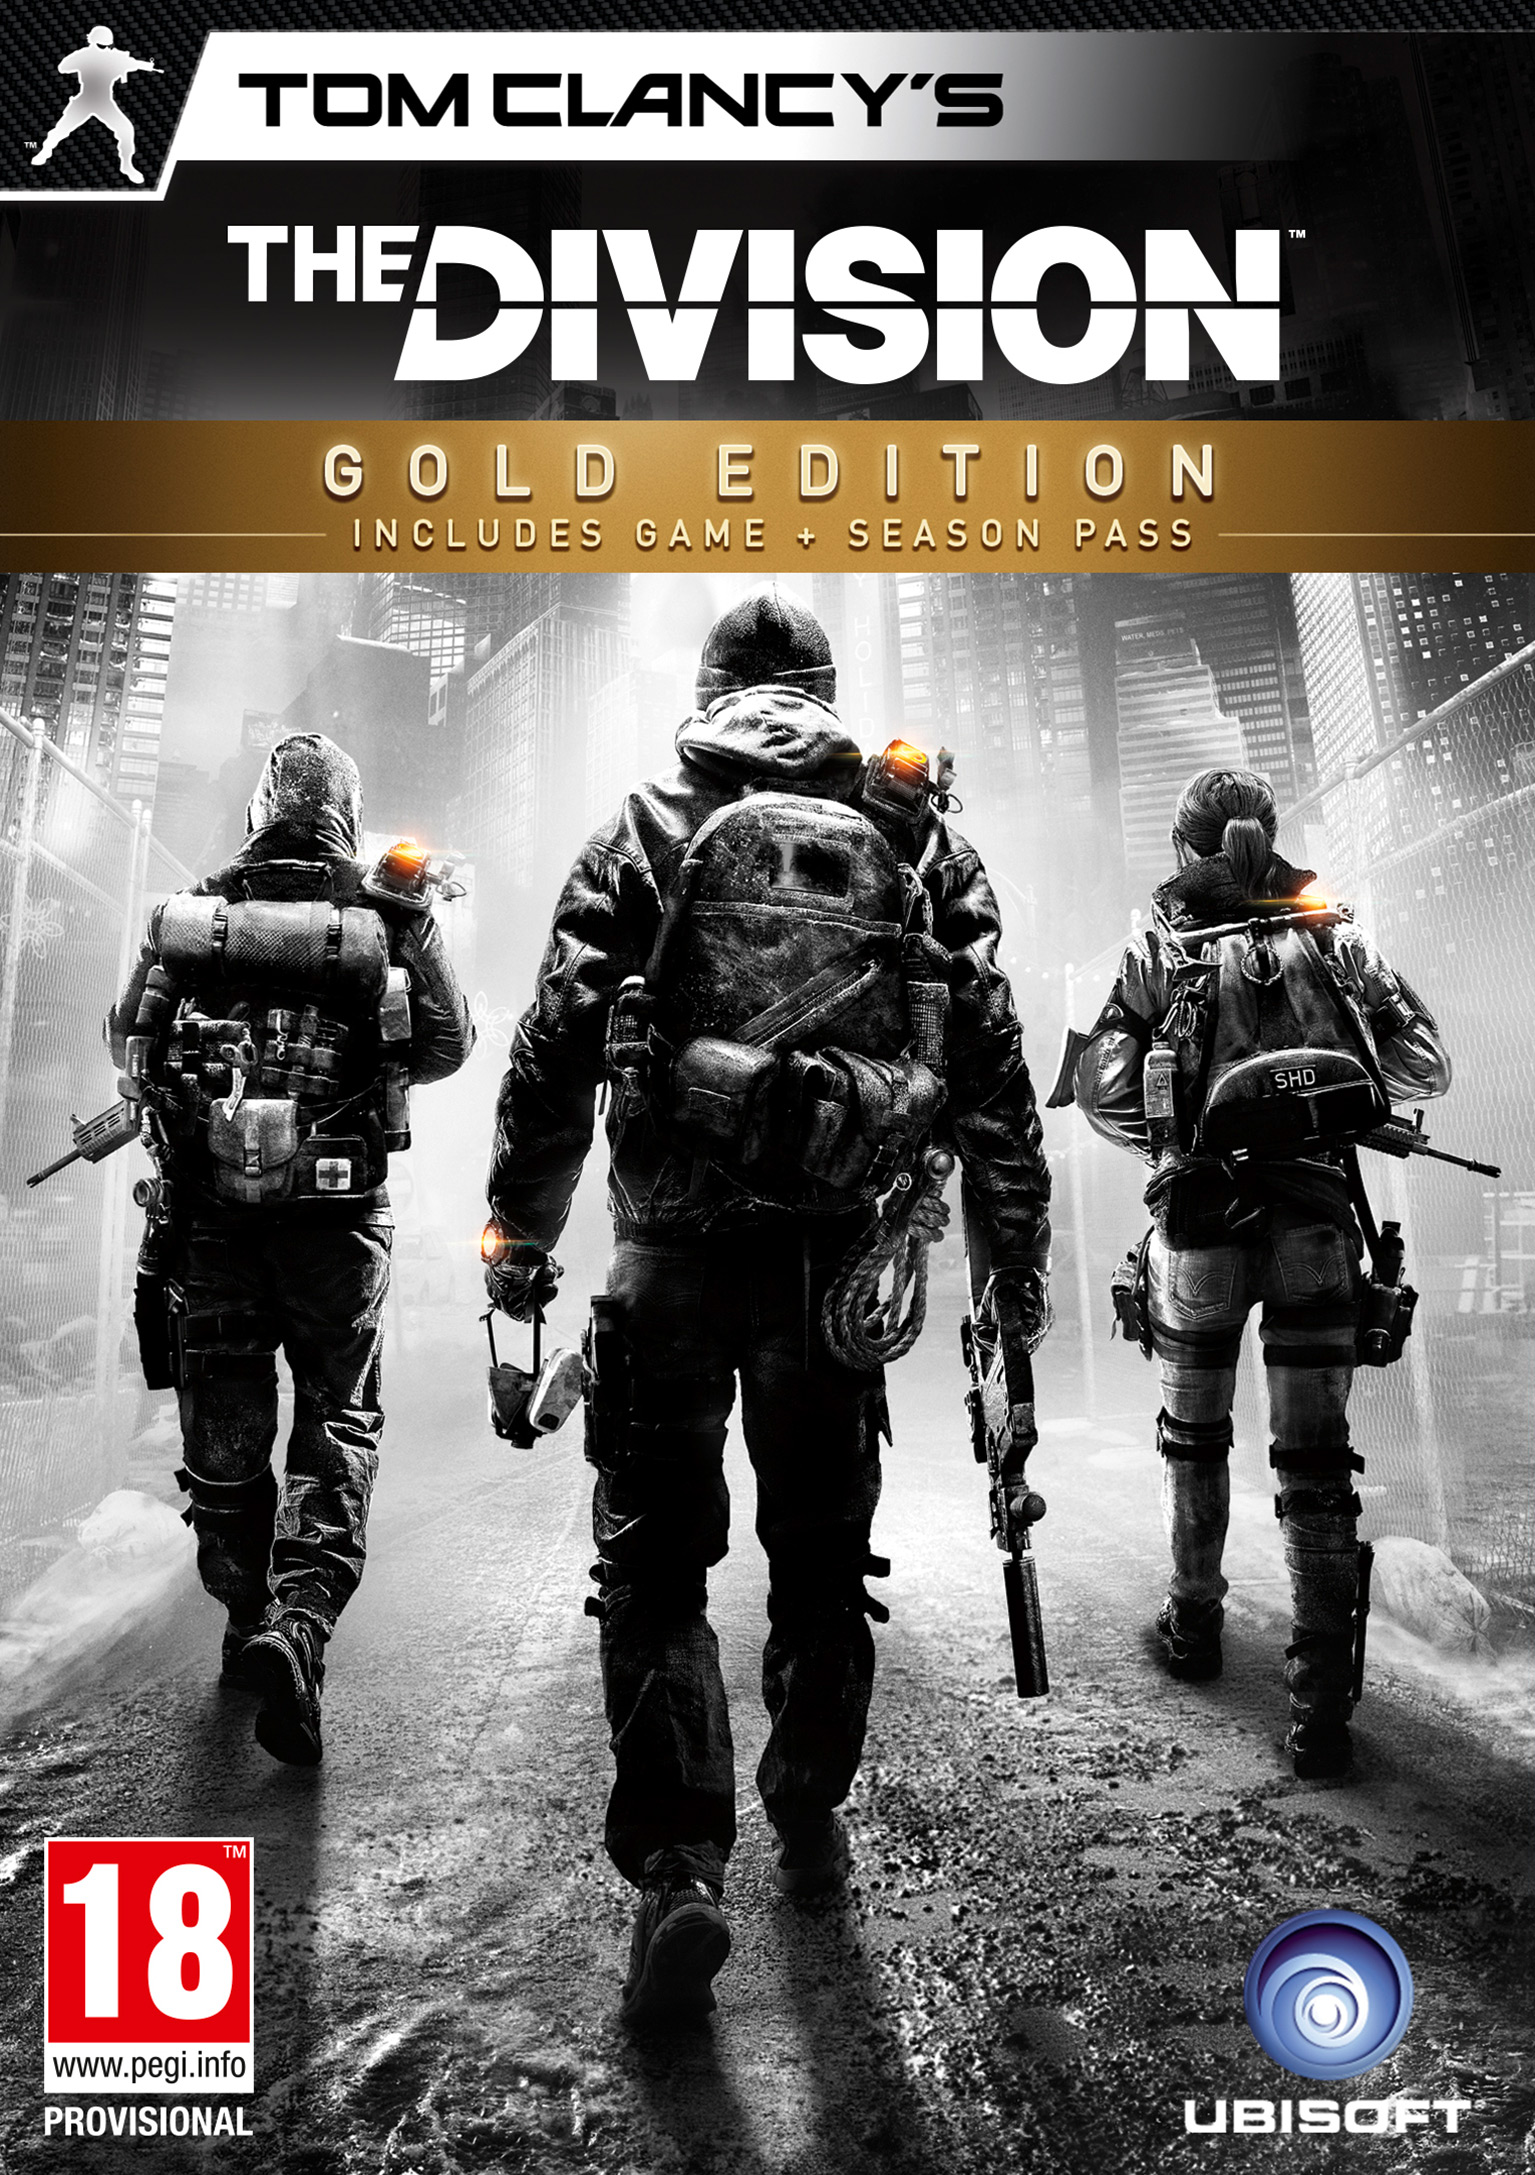 The Division - predn DVD obal 2